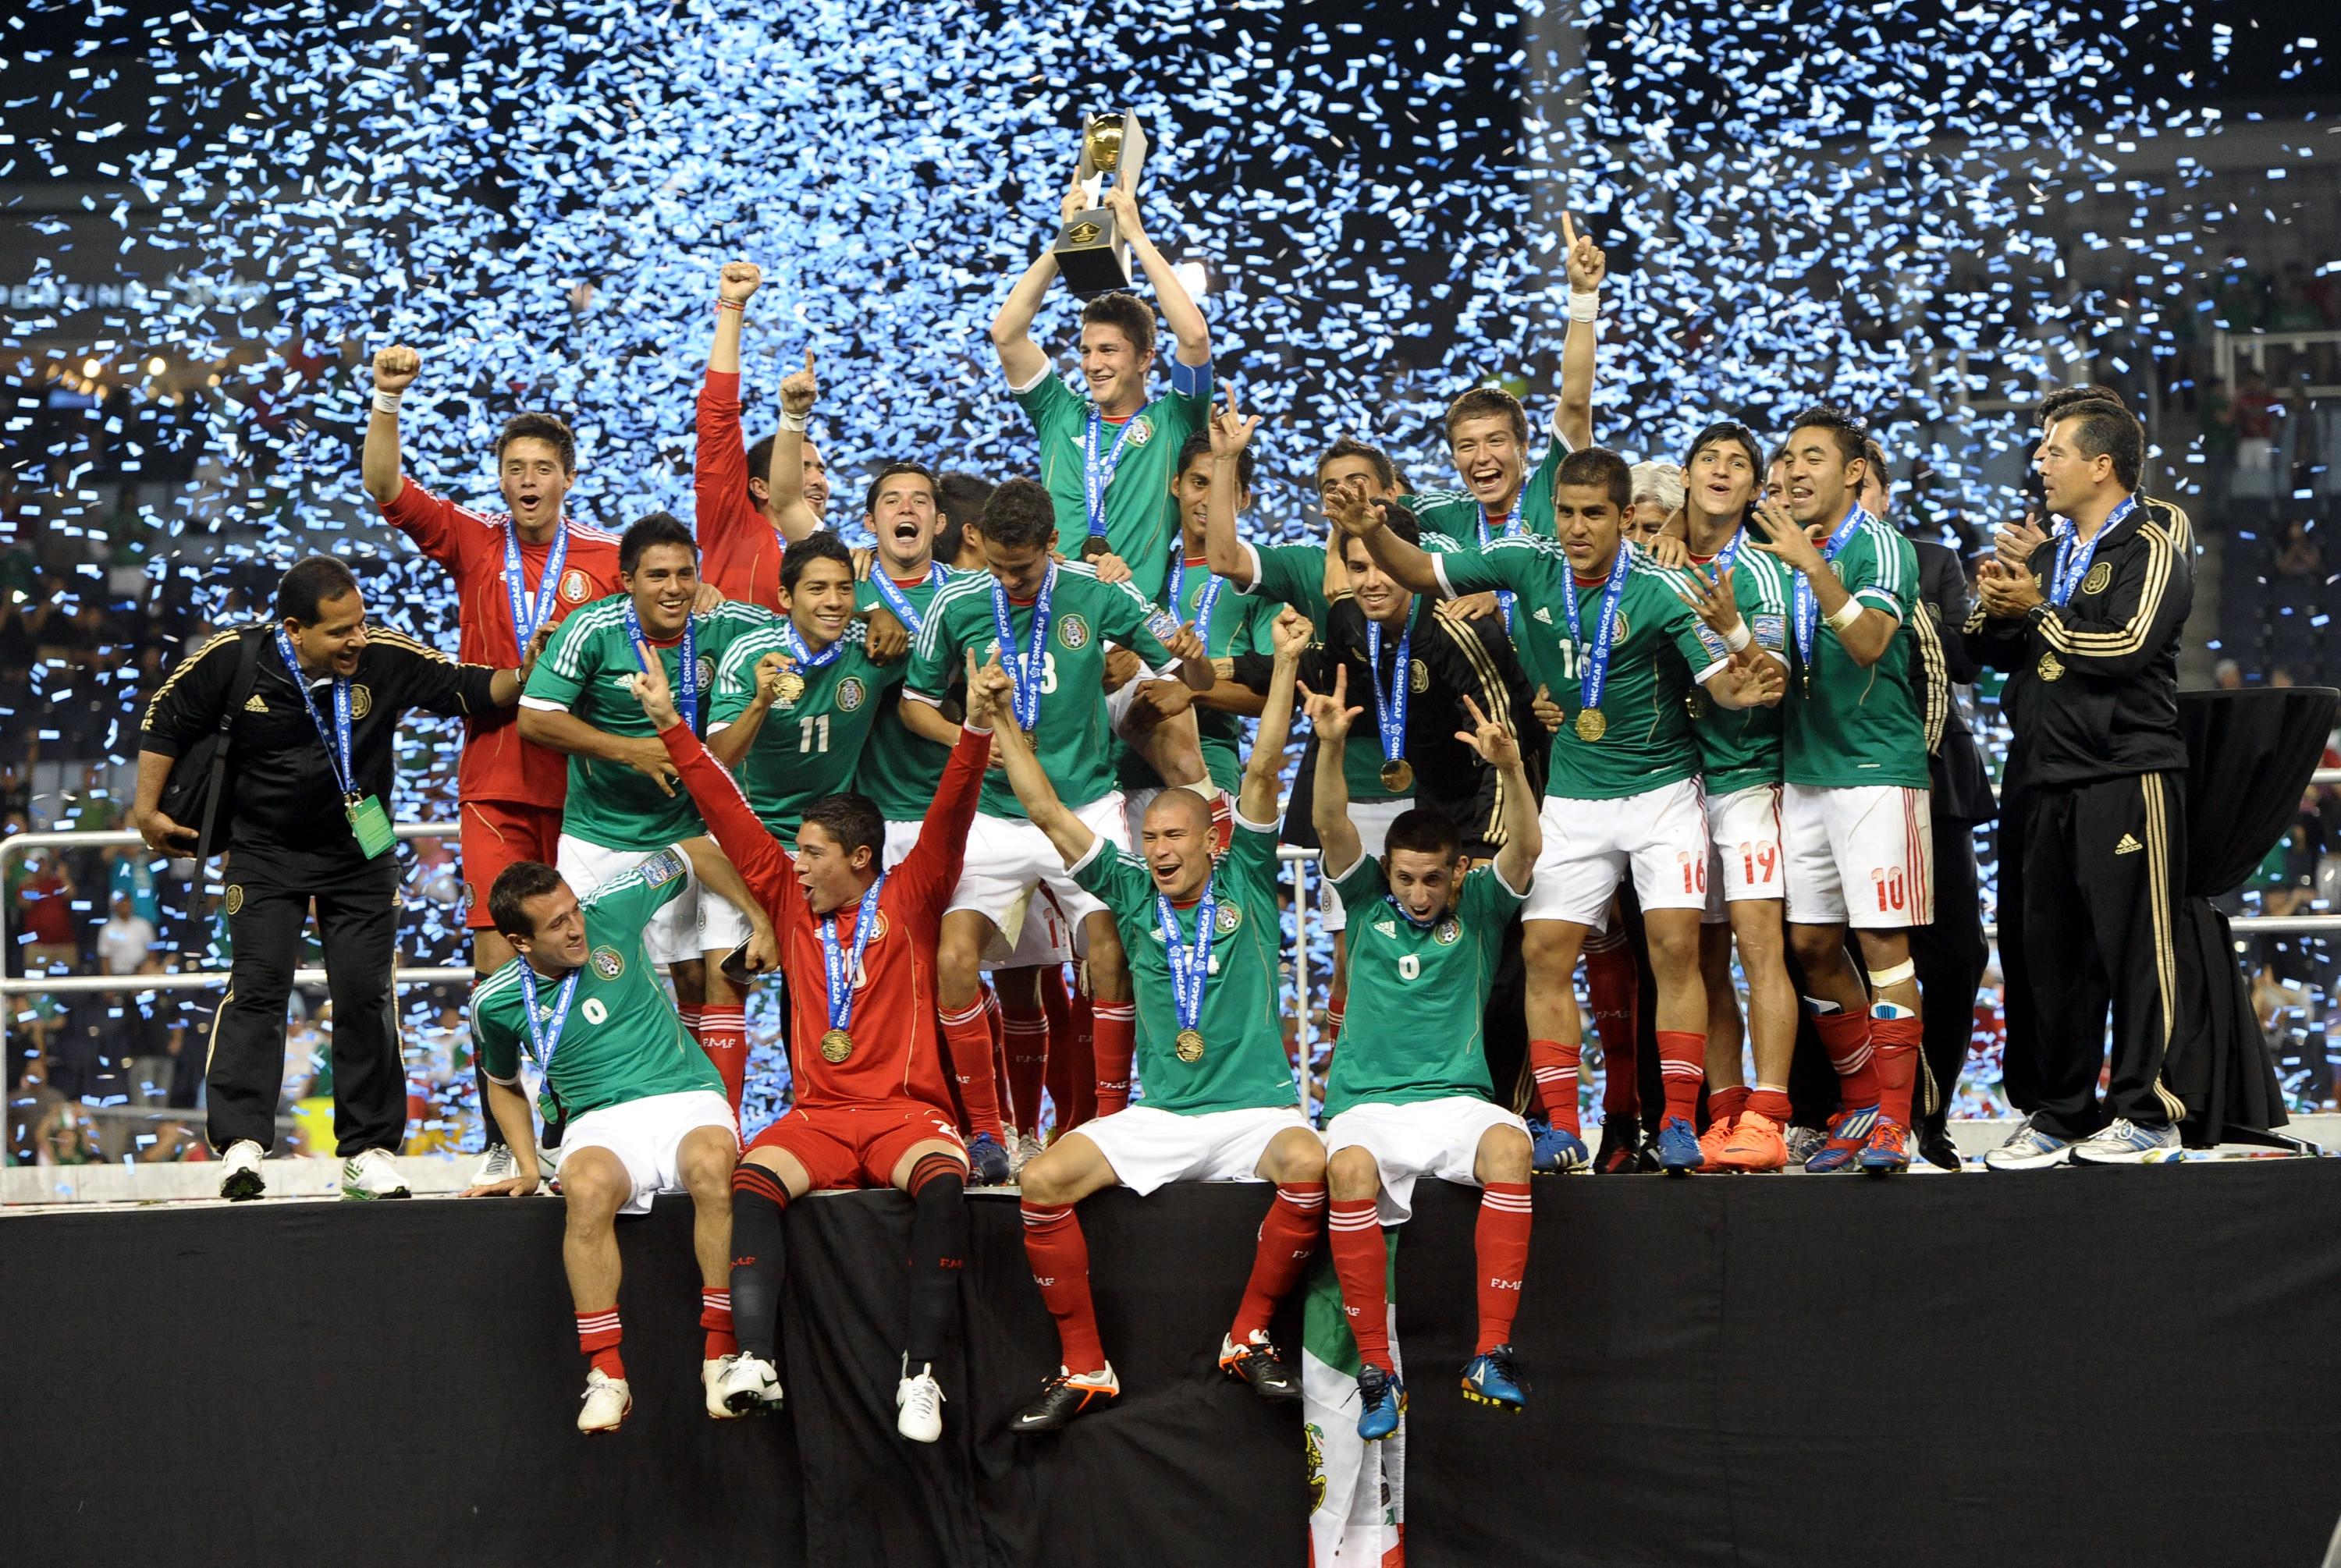 Mexico Soccer Team Wallpaper ·① WallpaperTag